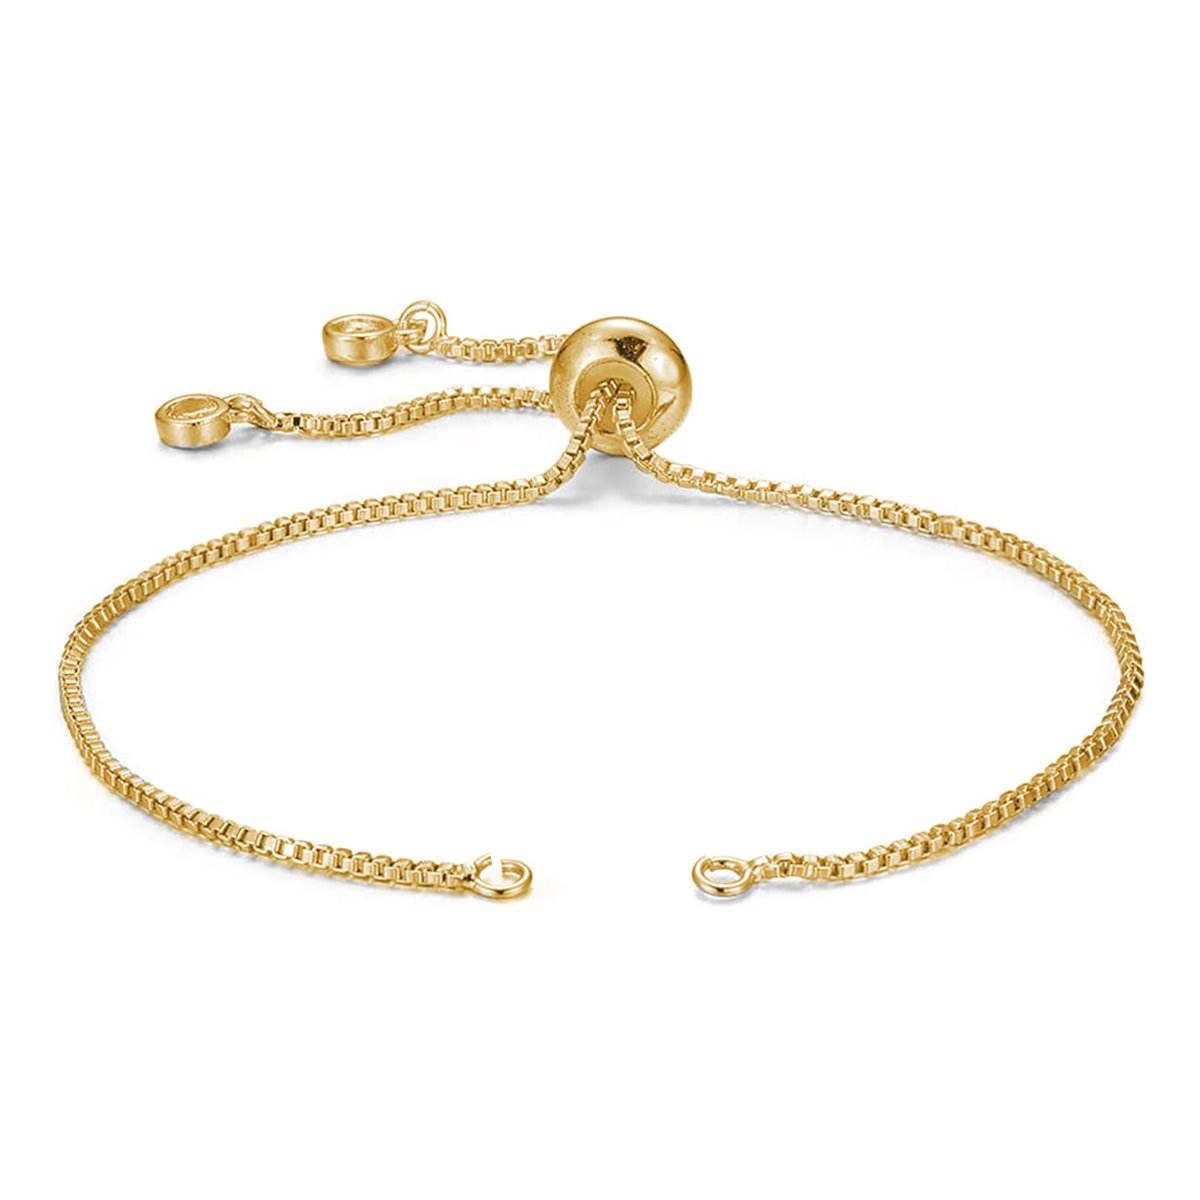 ZD Bracelet And Chains Gold Bracelet Chain Box Size 2453 Cm